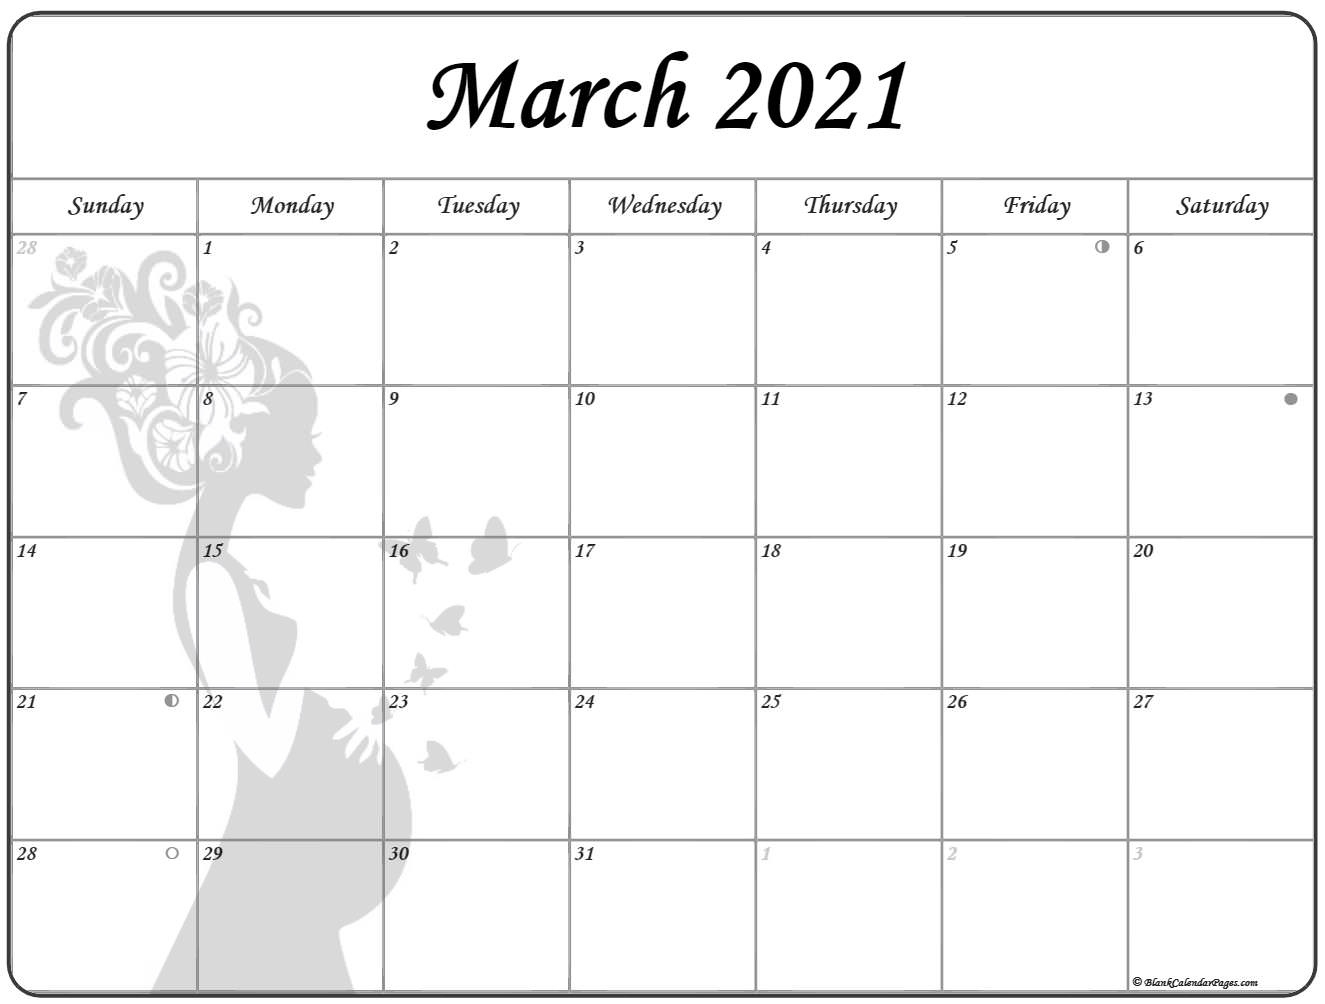 March 2021 Pregnancy Calendar | Fertility Calendar March To December 2021 Calendar